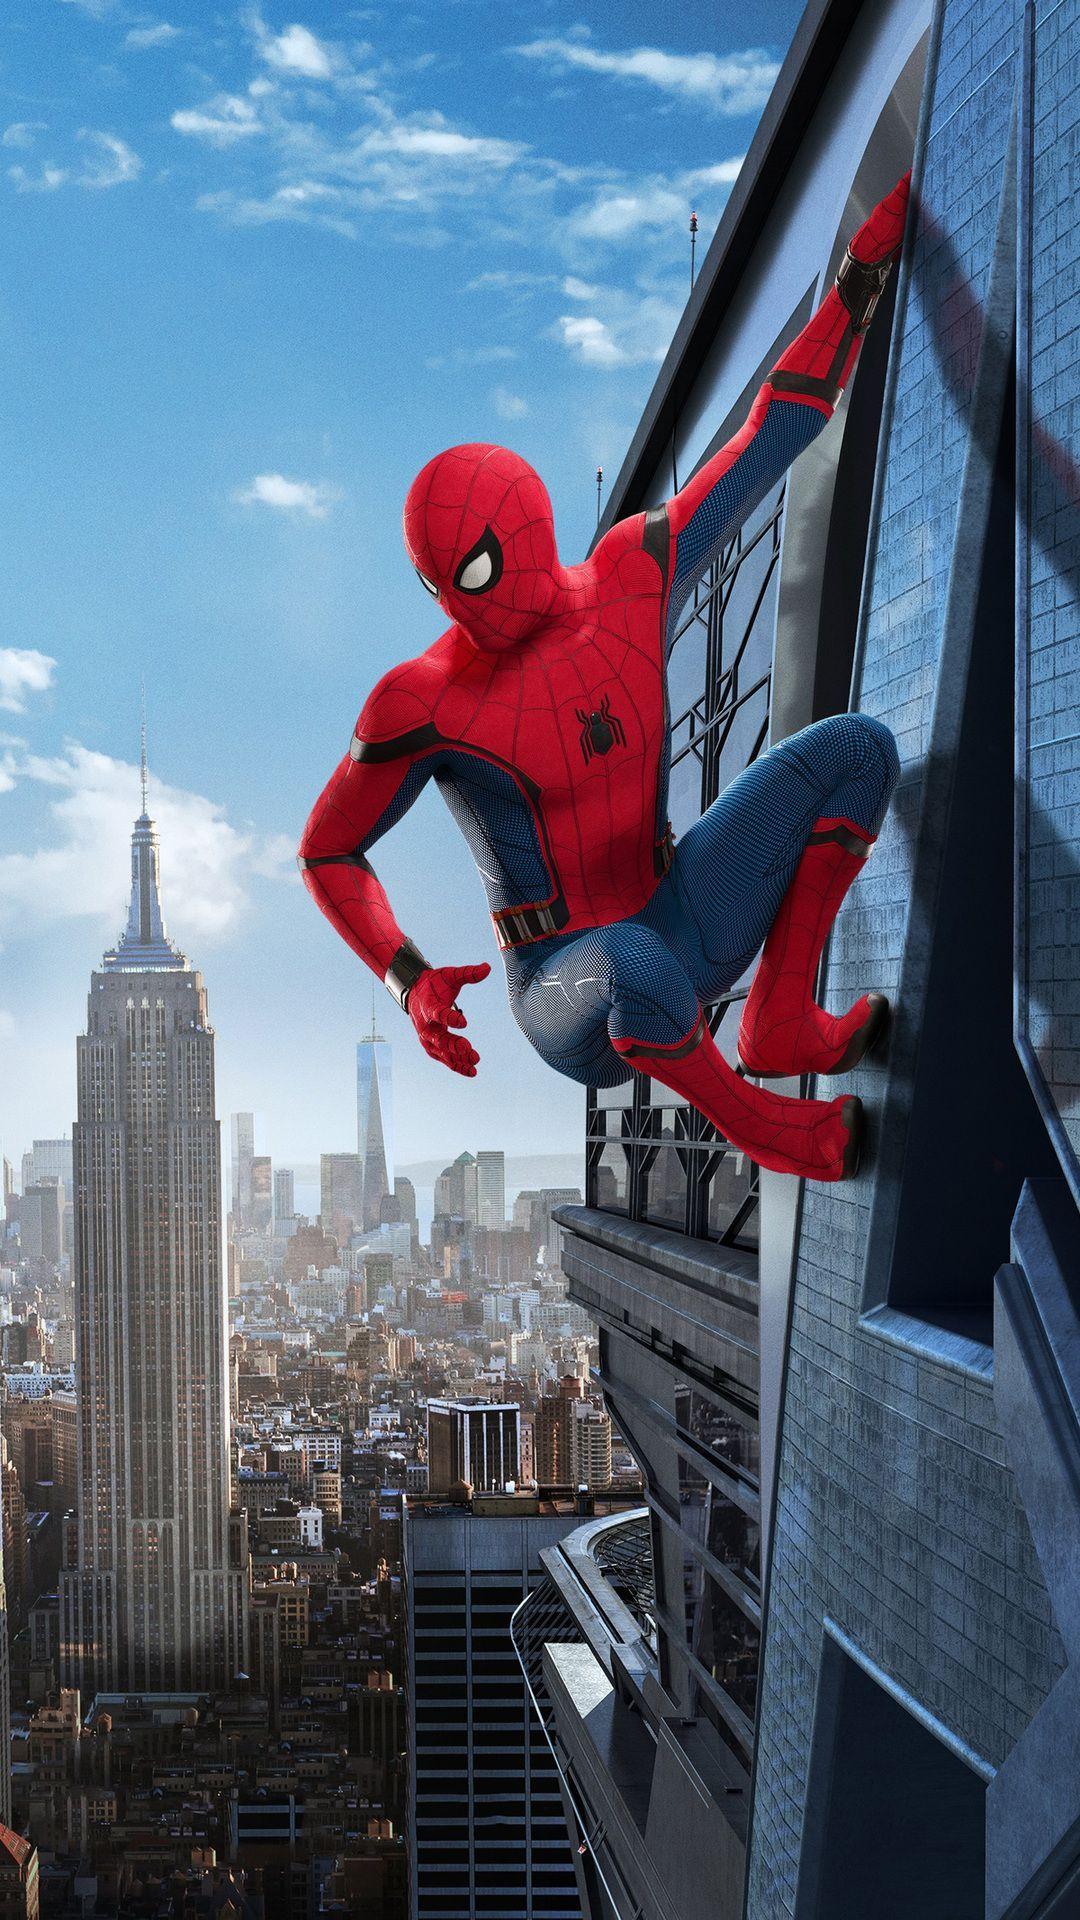 Spiderman Infinity War 4k wallpaper for iPhone